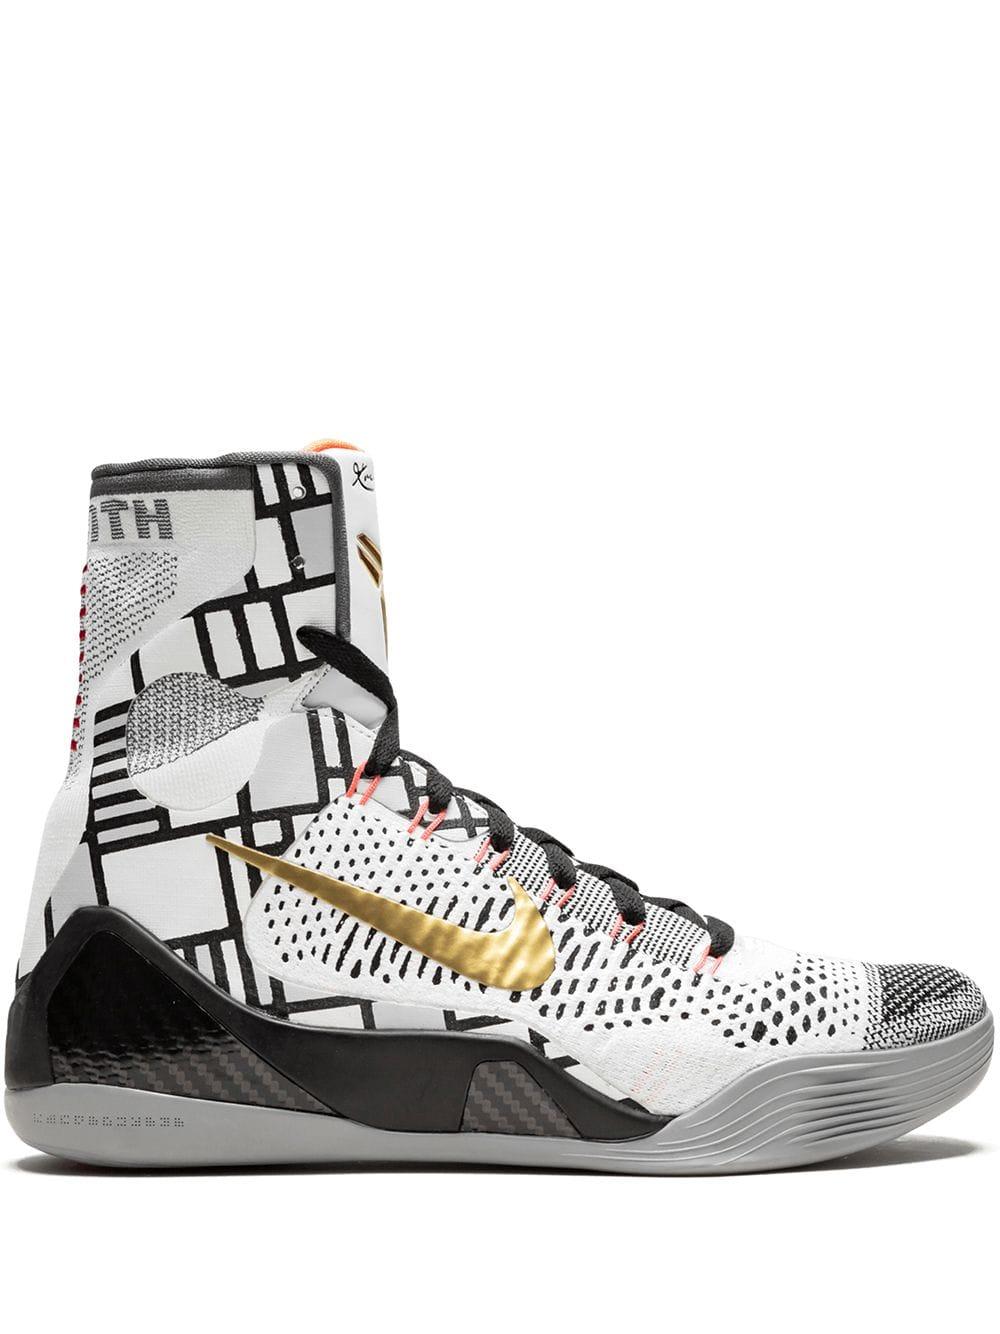 Nike Kobe 9 Elite "gold" in Black,Gold,White (White) for Men - Save 75% |  Lyst